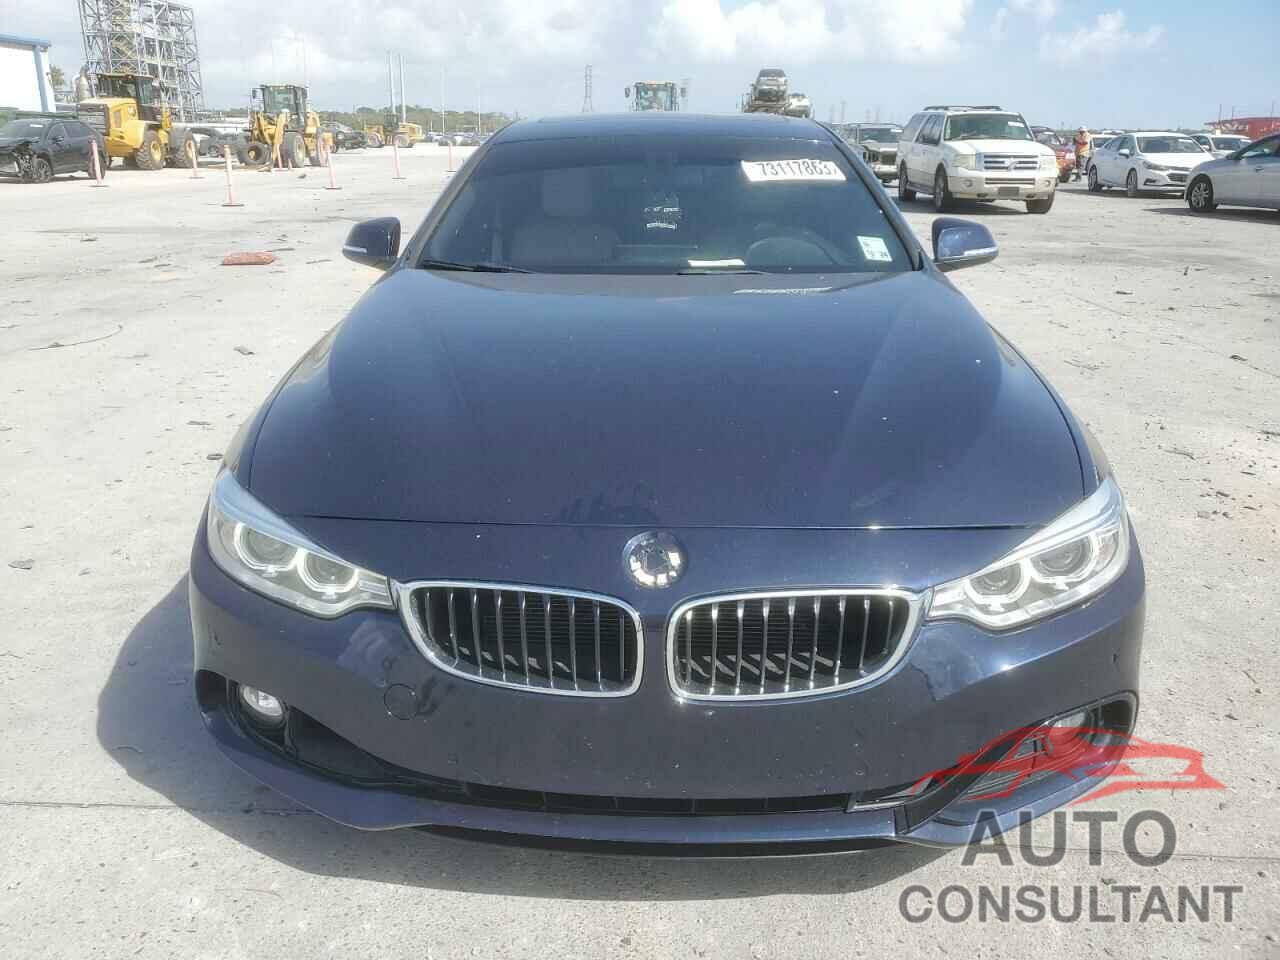 BMW 4 SERIES 2016 - WBA4A9C51GG506140